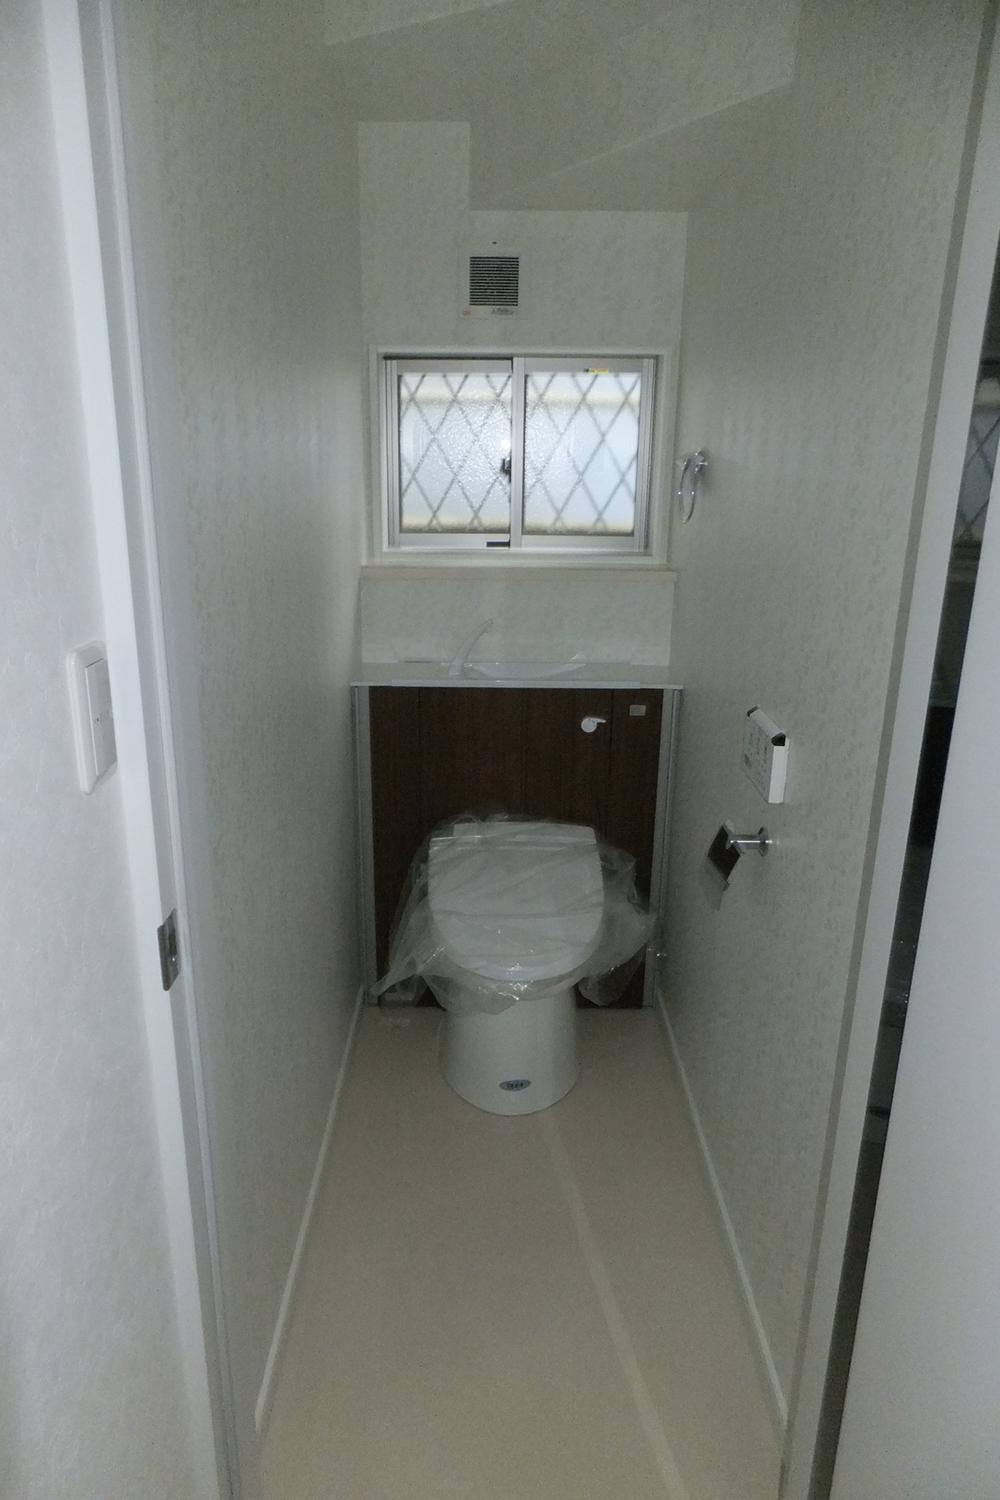 Building plan example (introspection photo). Toilet